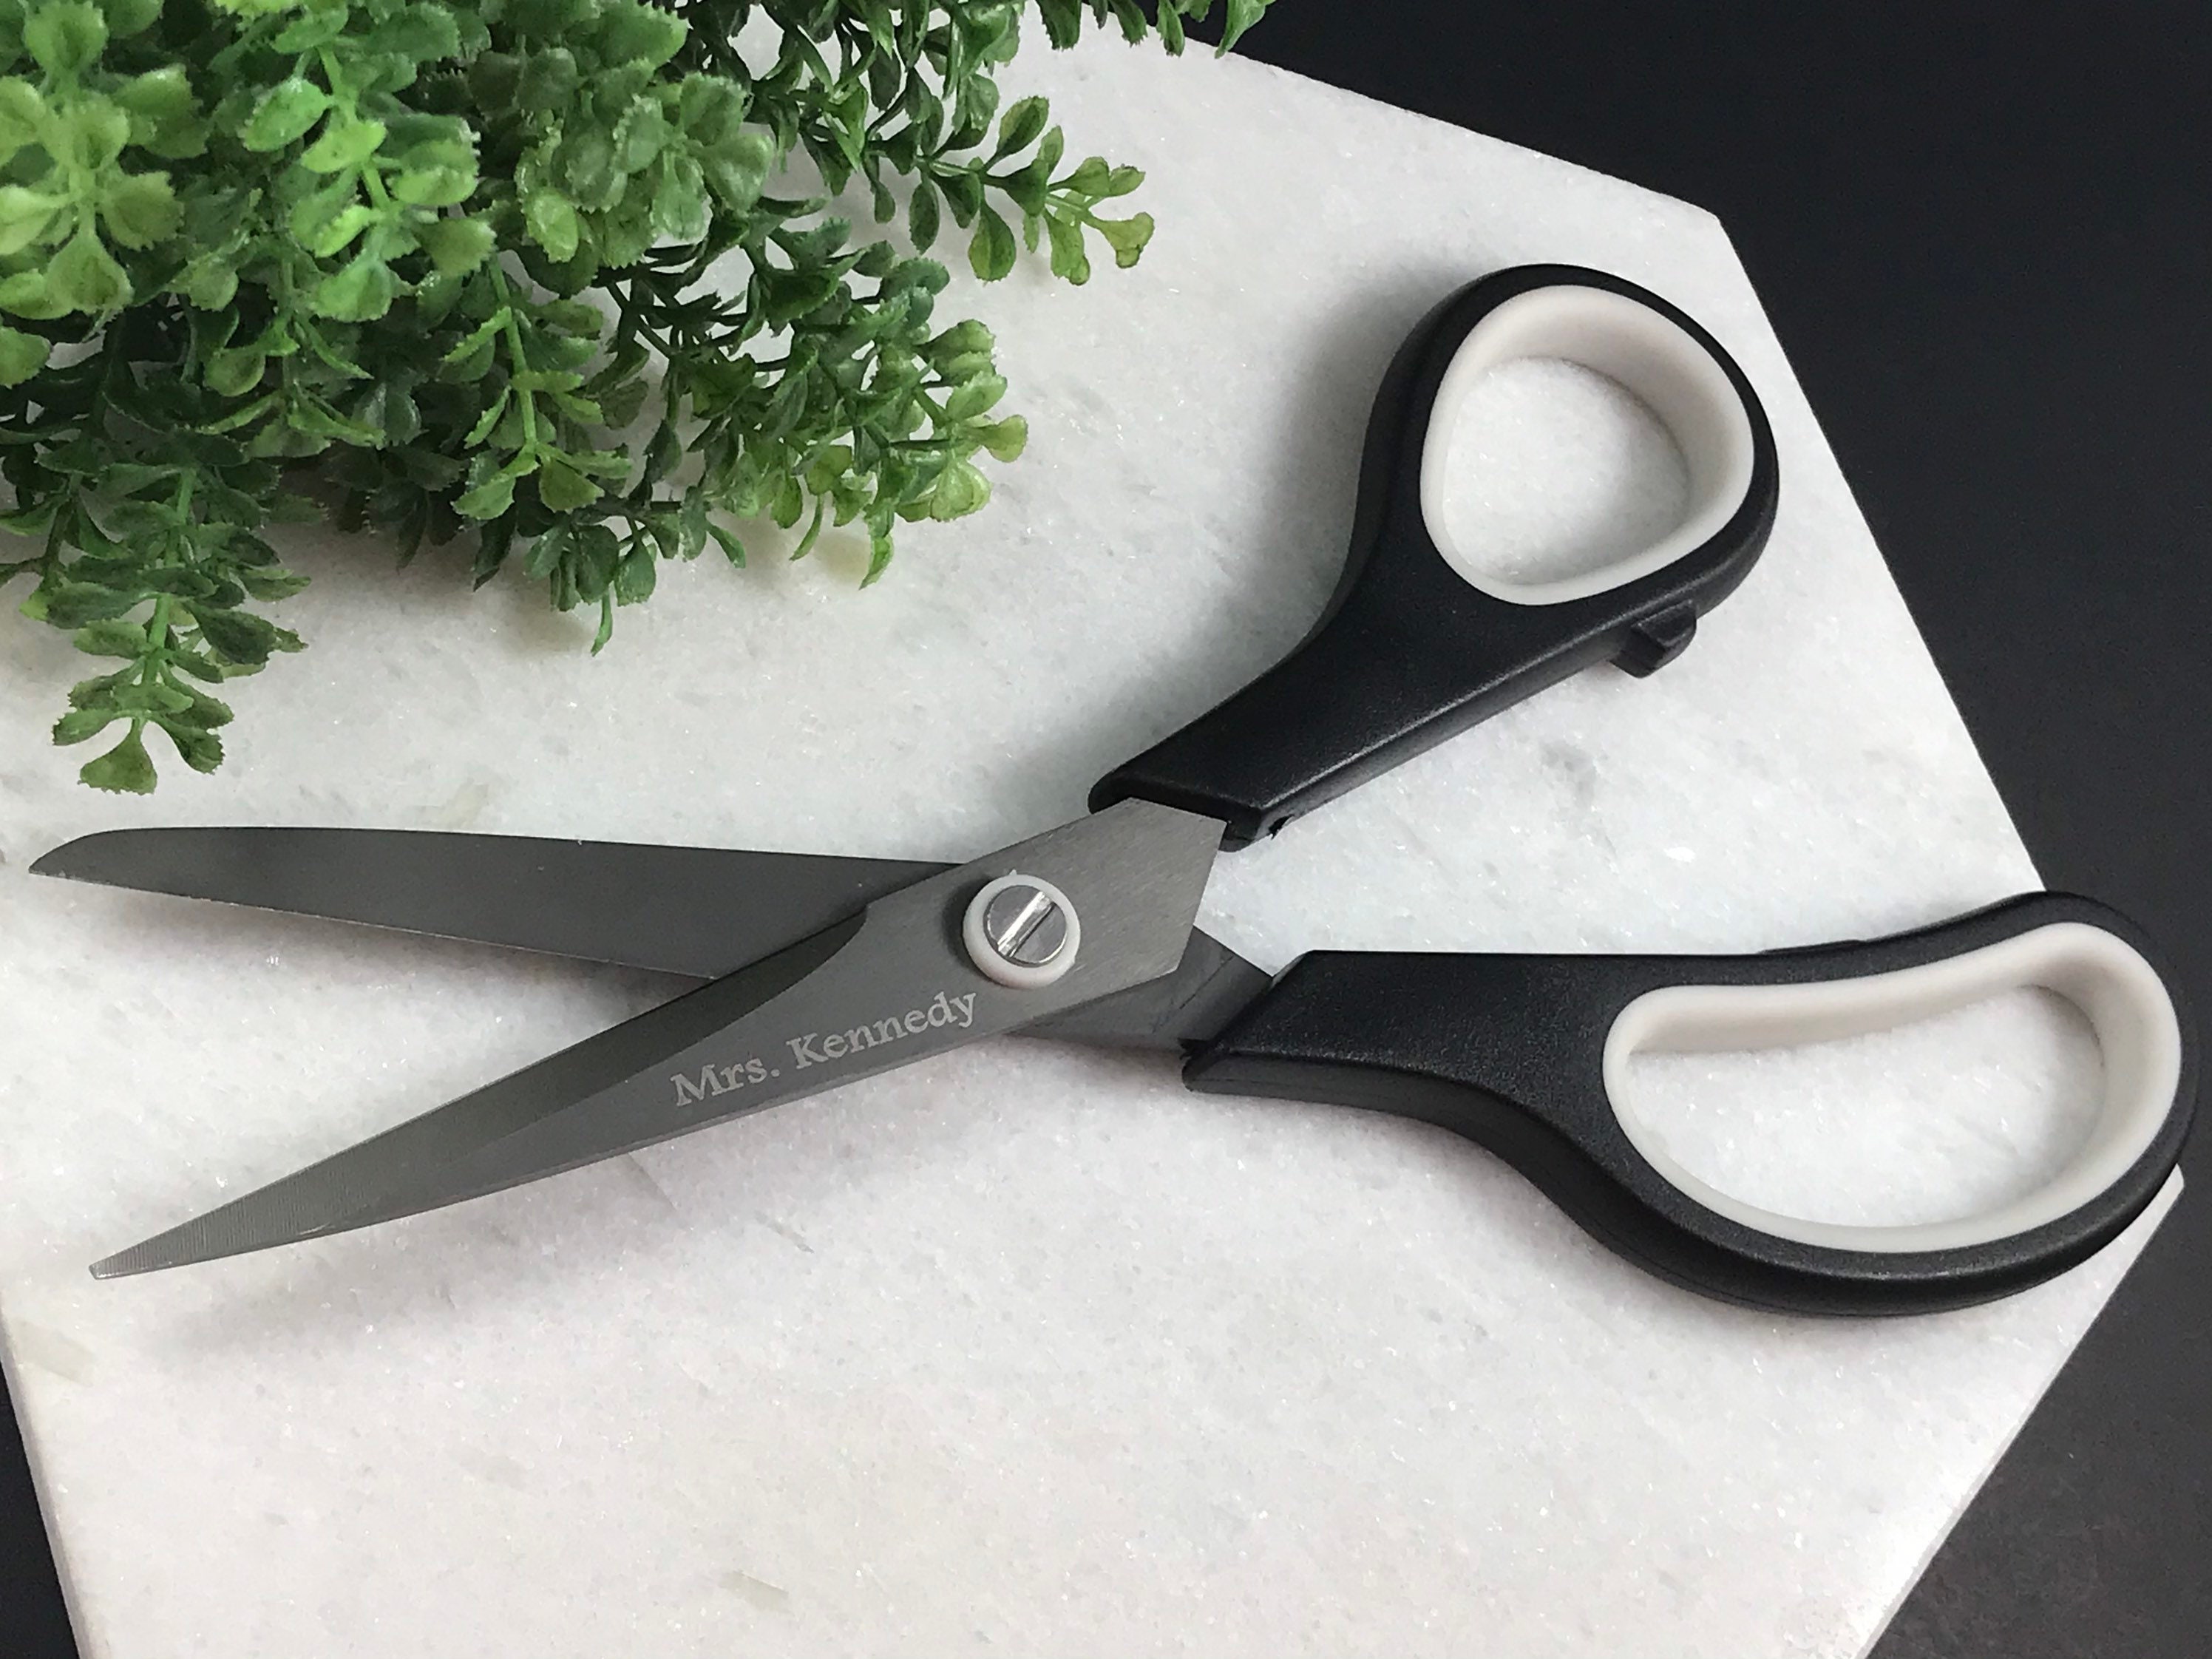 Fiskars 5 Blunt-Tip Scissors for Kids 4+ - Scissors for School or Crafting  - Back to School Supplies - Blue